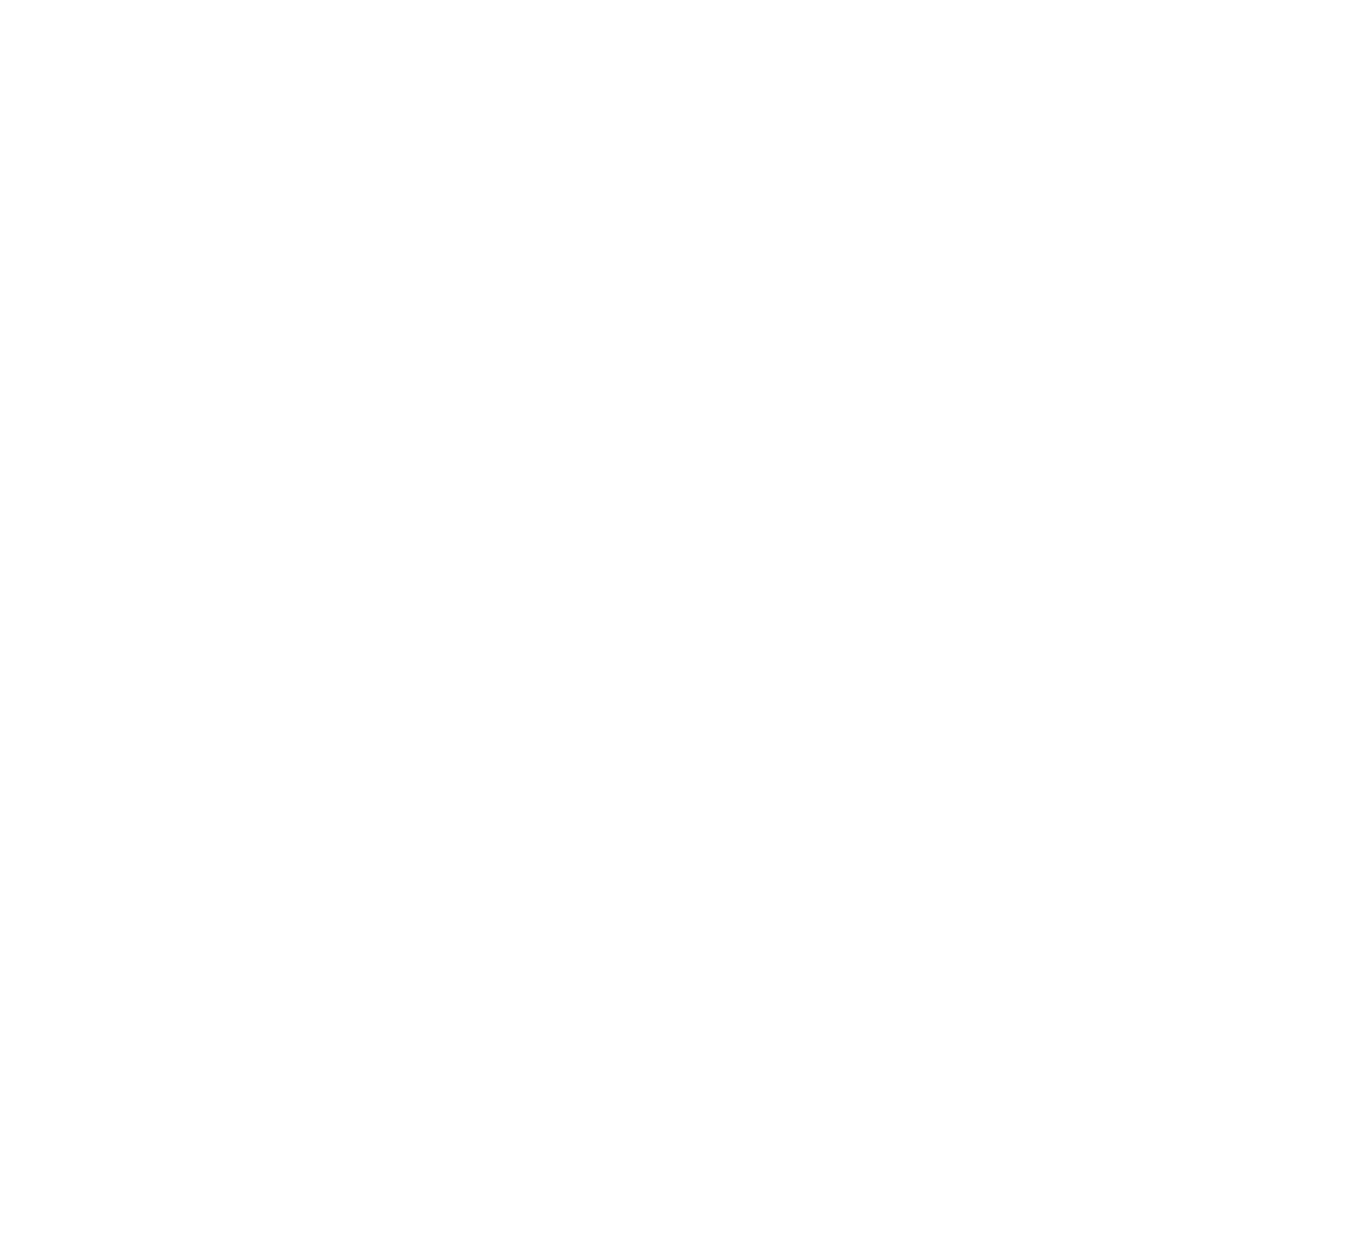 Cricket District